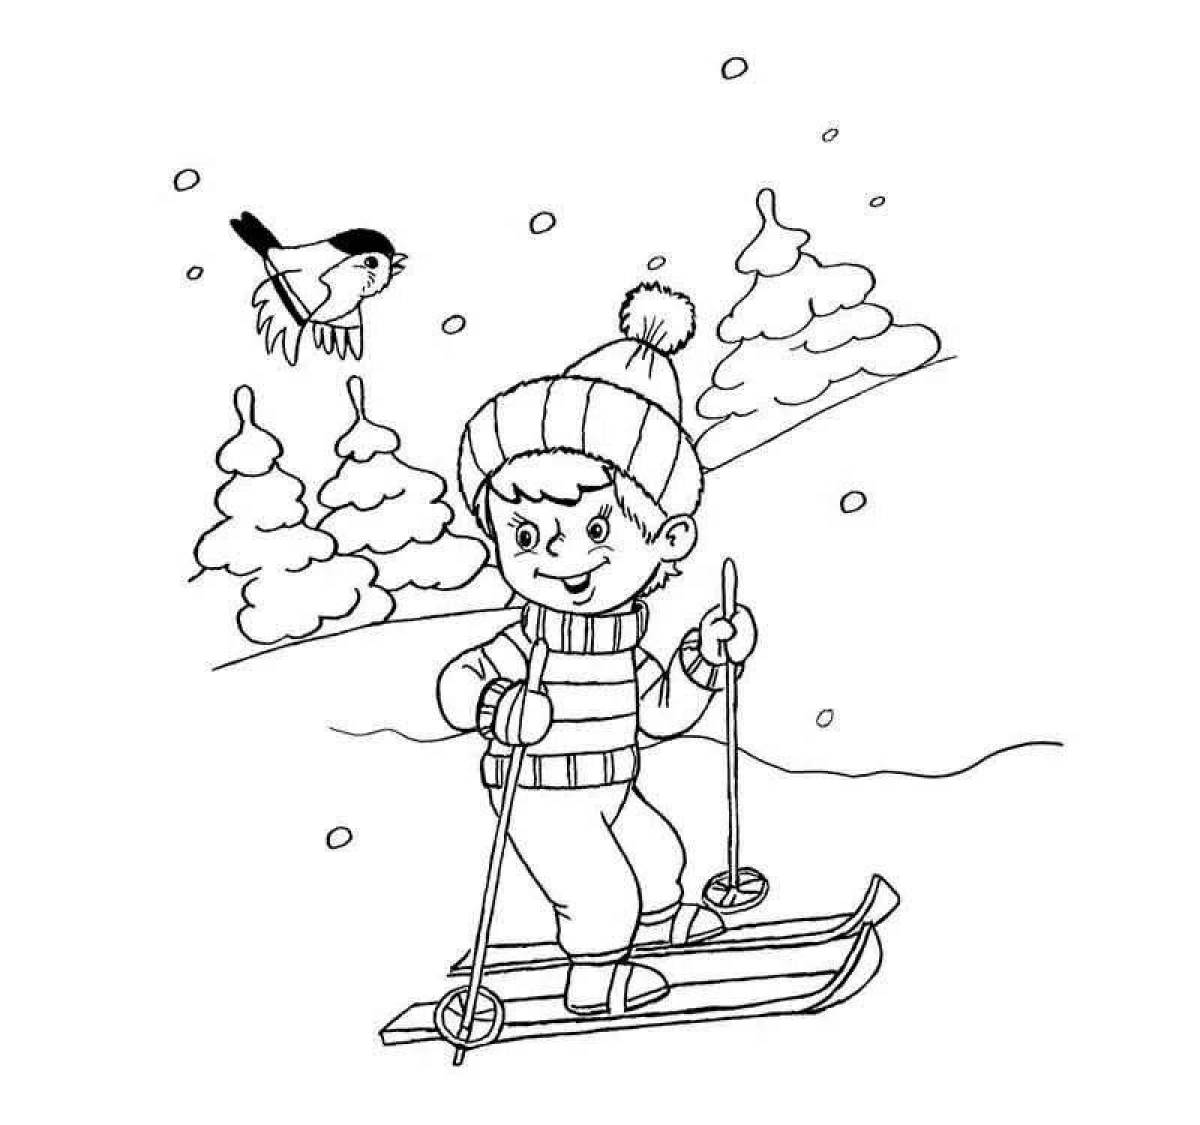 Refreshing winter walk coloring page